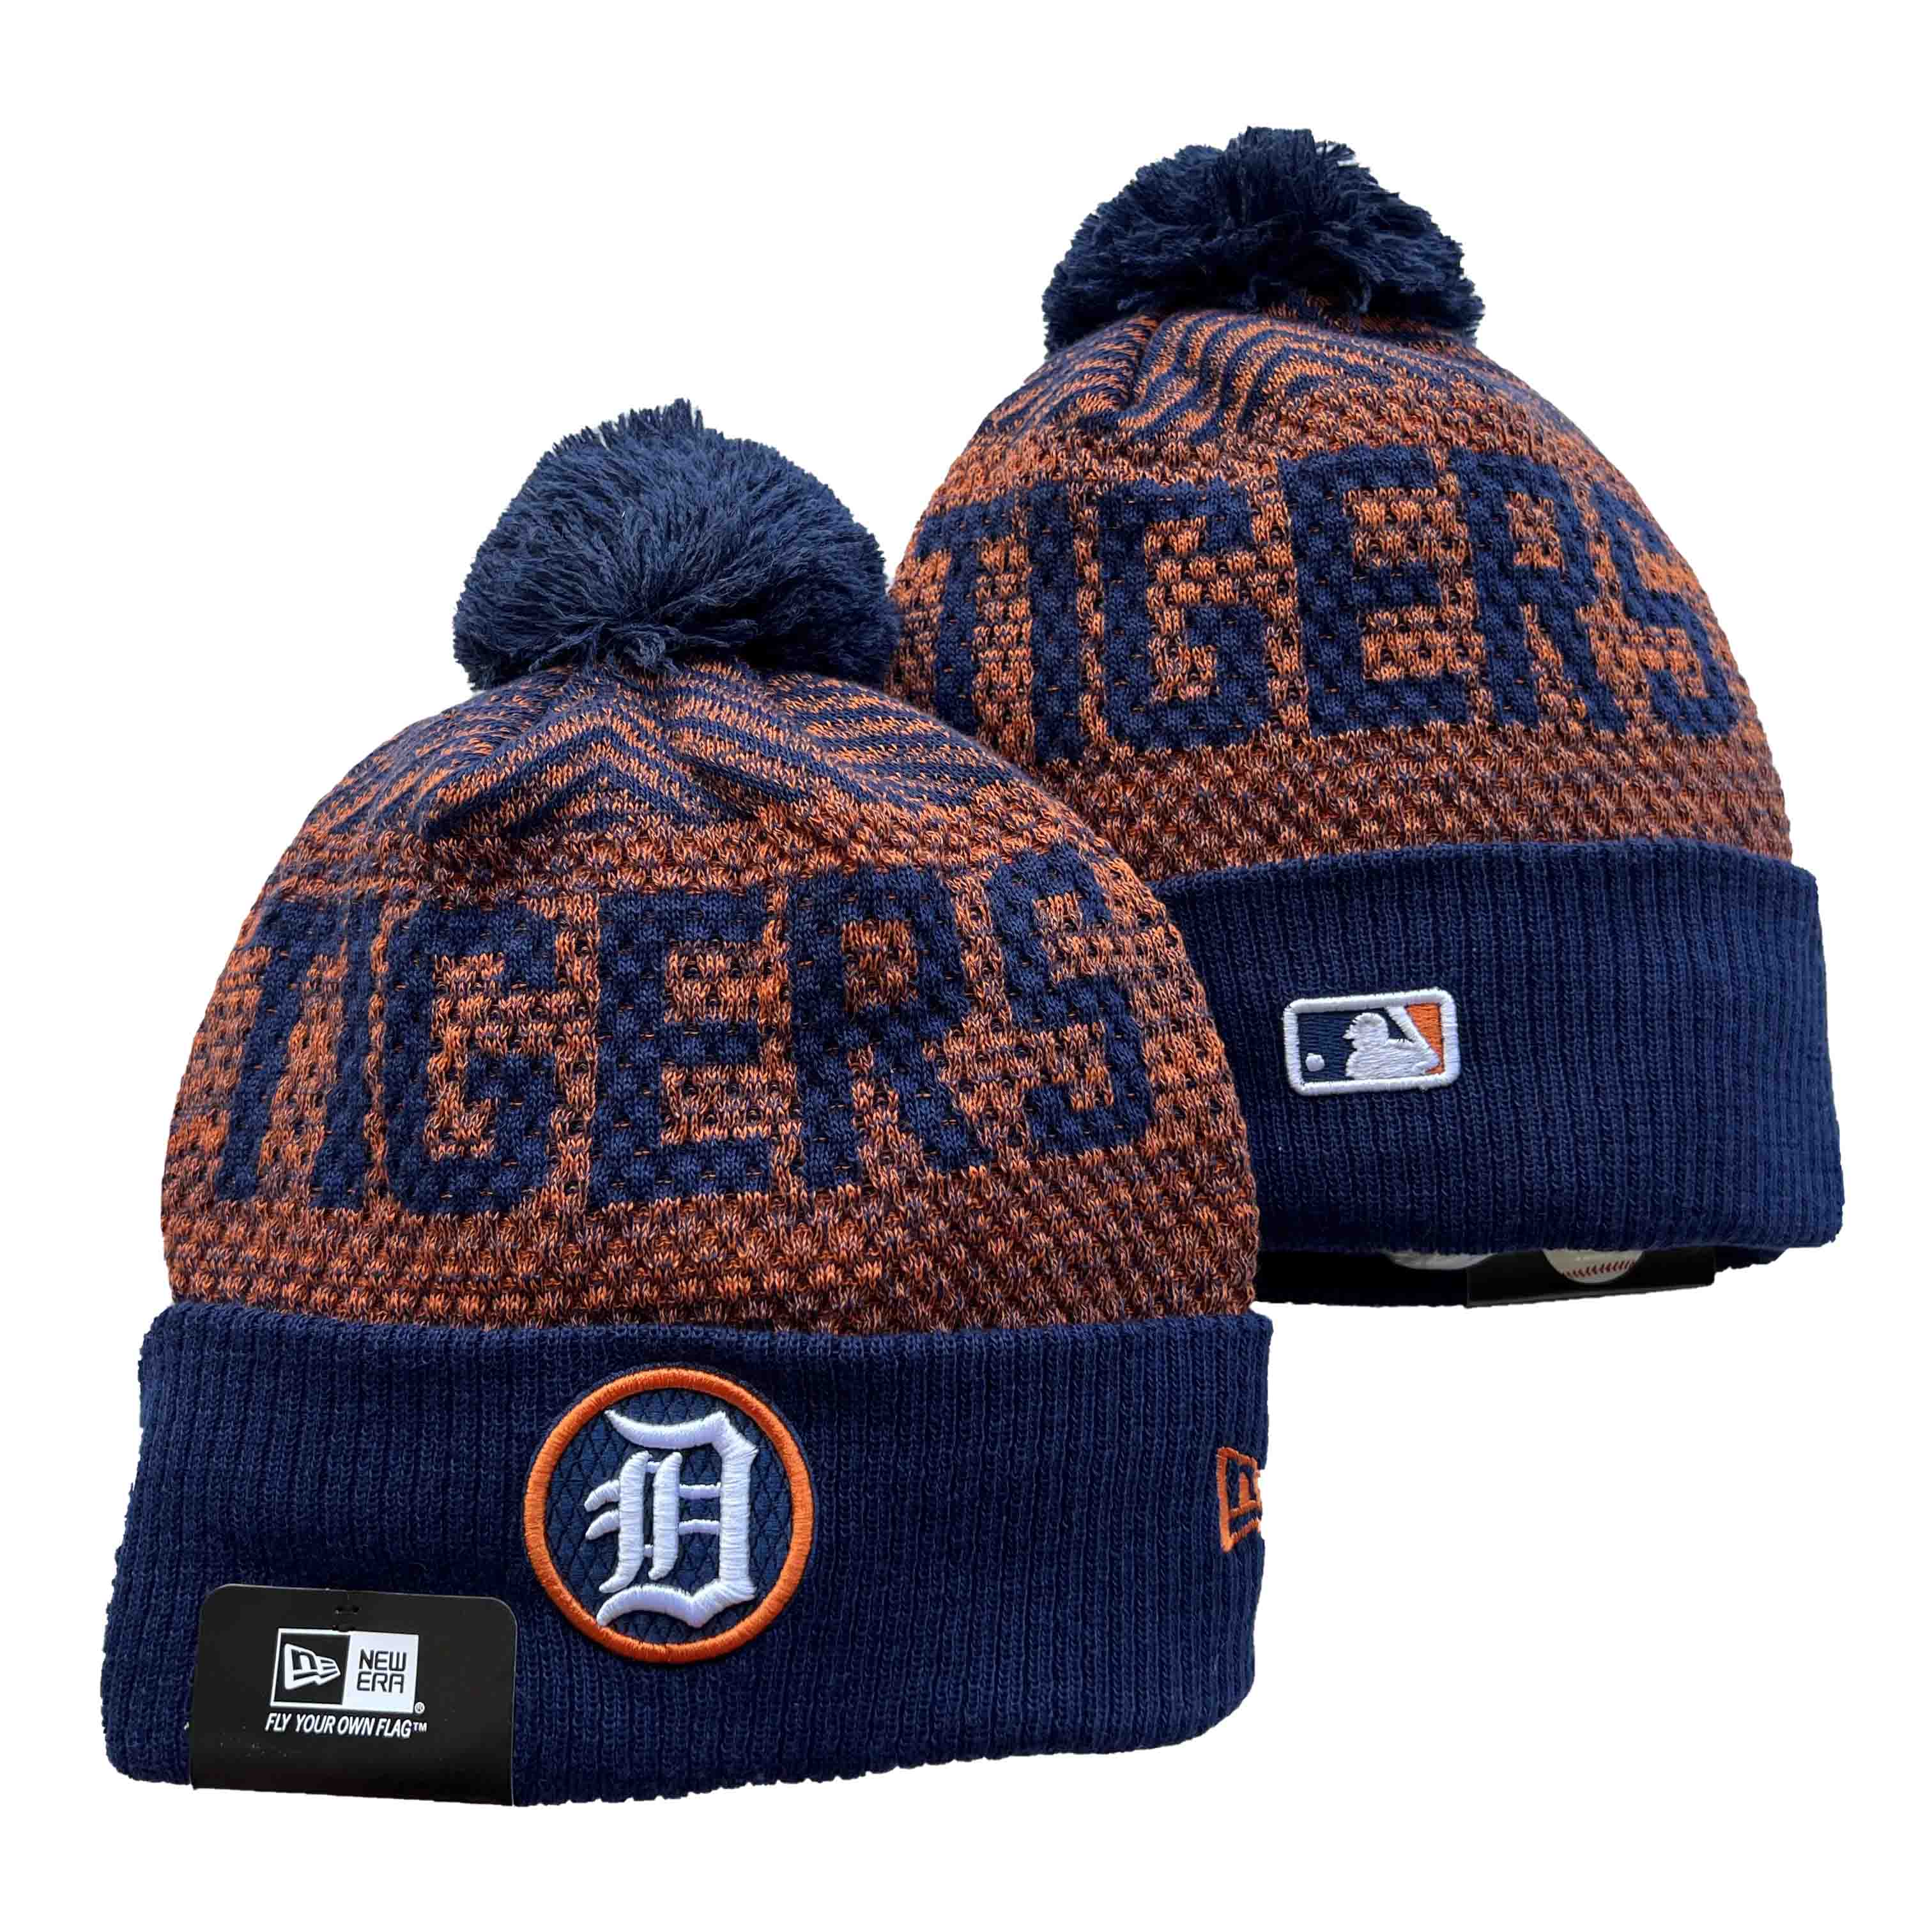 MLB Detroit Tigers Beanies Knit Hats-YD119